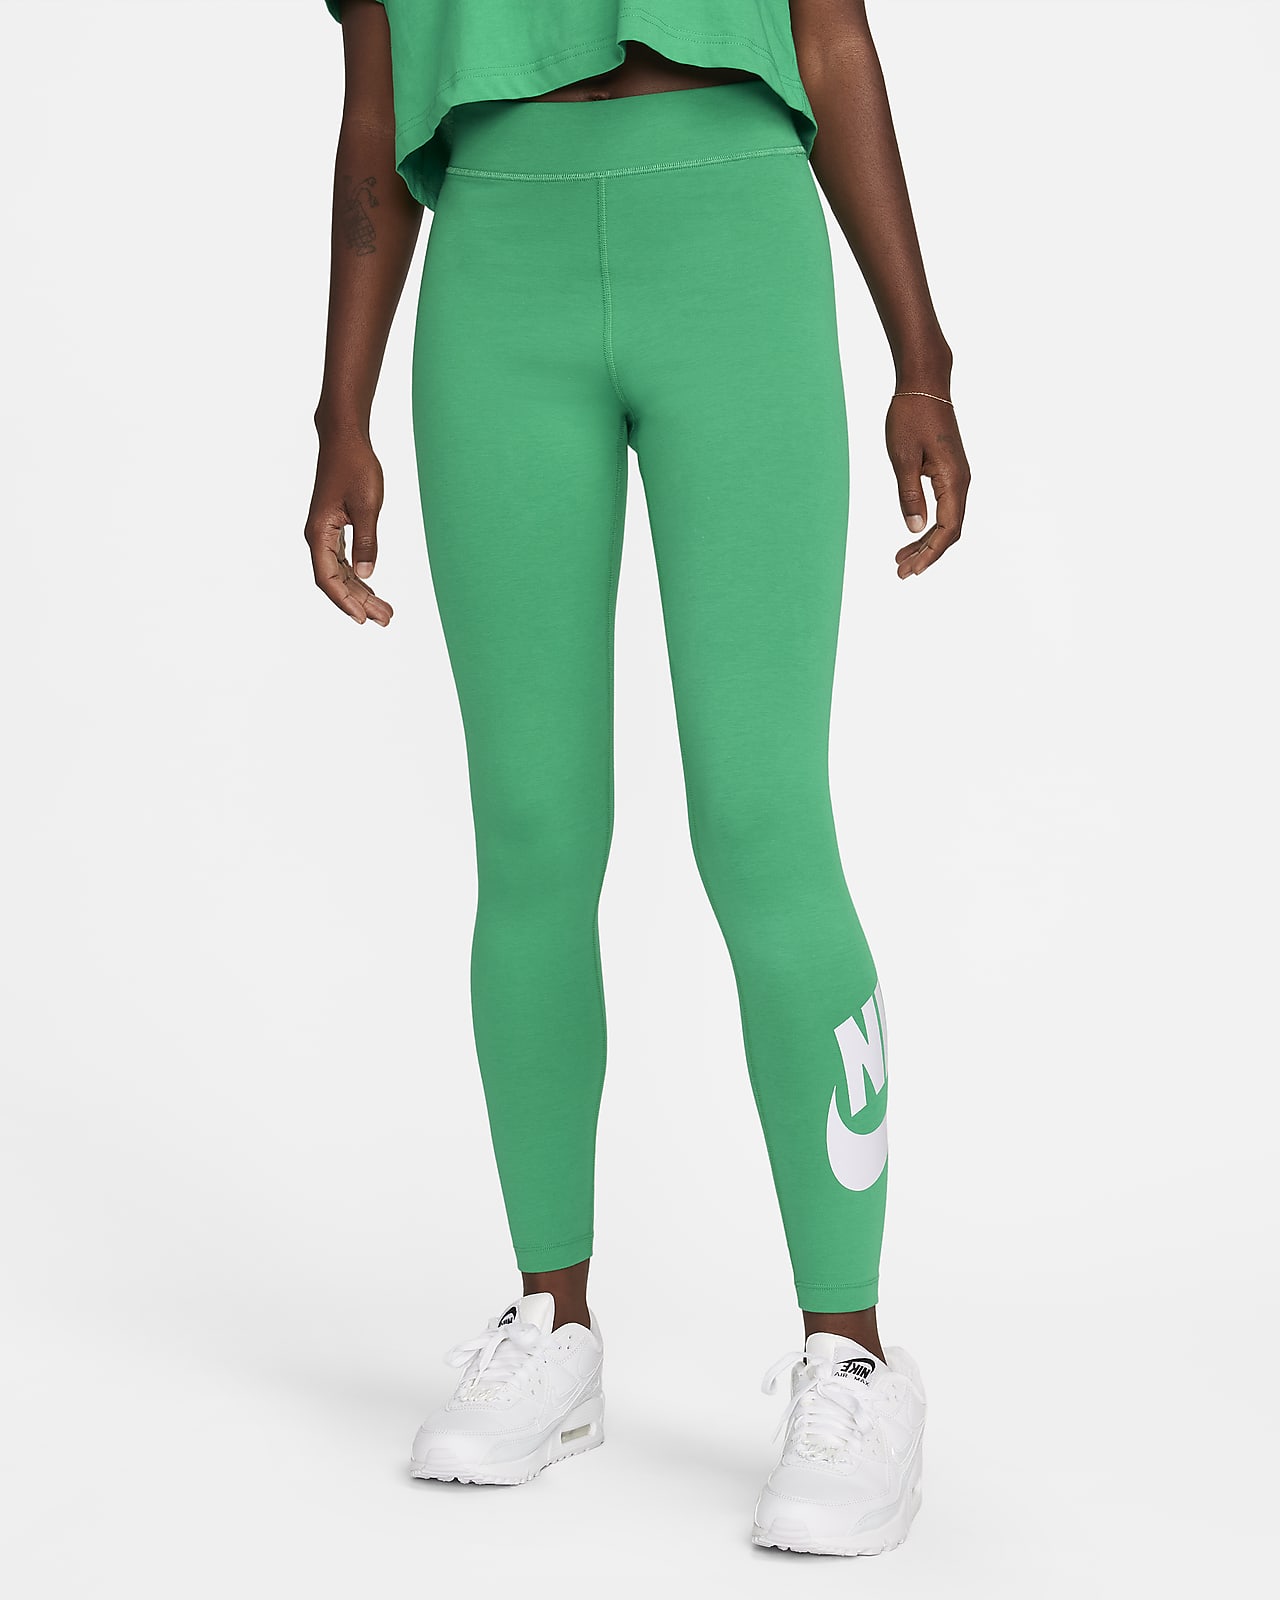 NWOT Nike Sculpt Victory Crop Training Tights  Just do it leggings, Lime  green leggings, Running capris